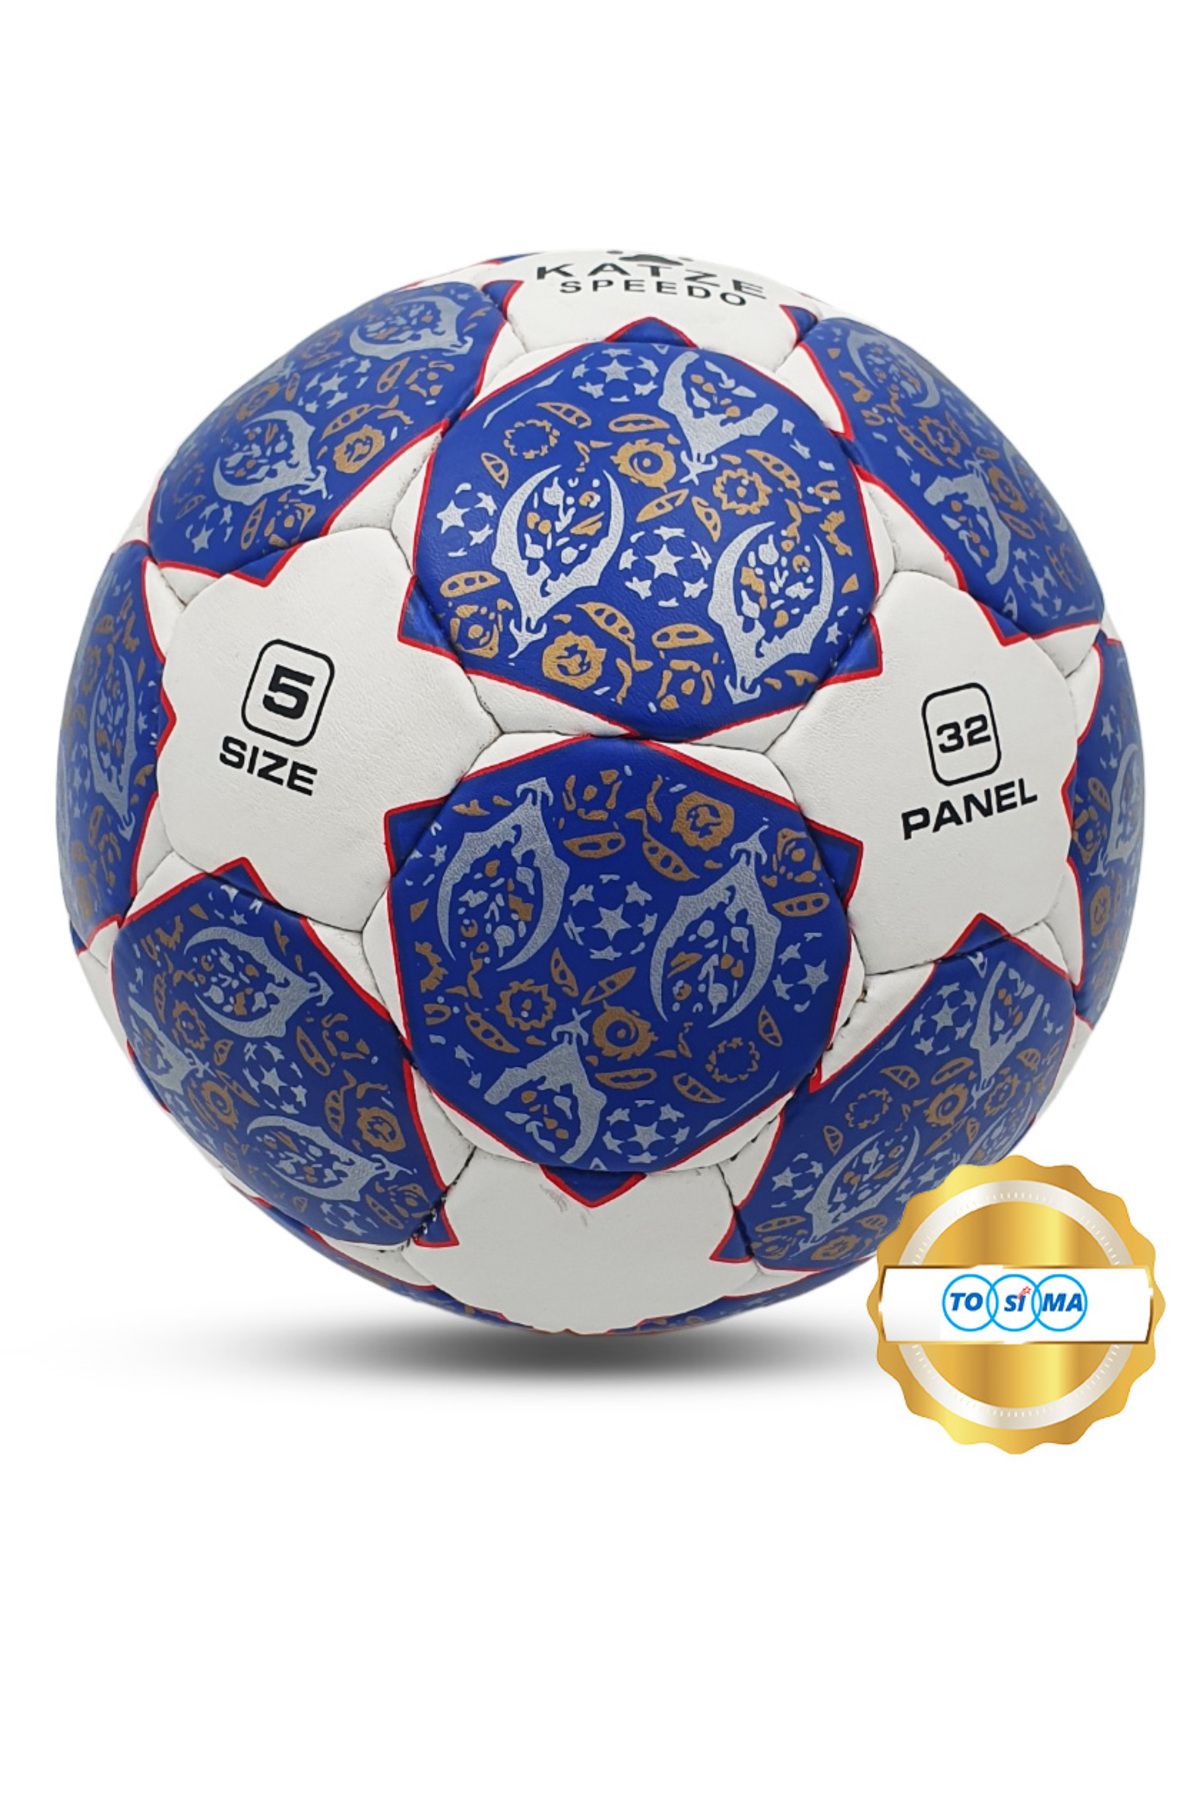 Tosima Gold Cup El Dikişli Futbol Topu Ve Hediye Top Şişirme Pompası Maç Topu Halı Saha Topu No 5